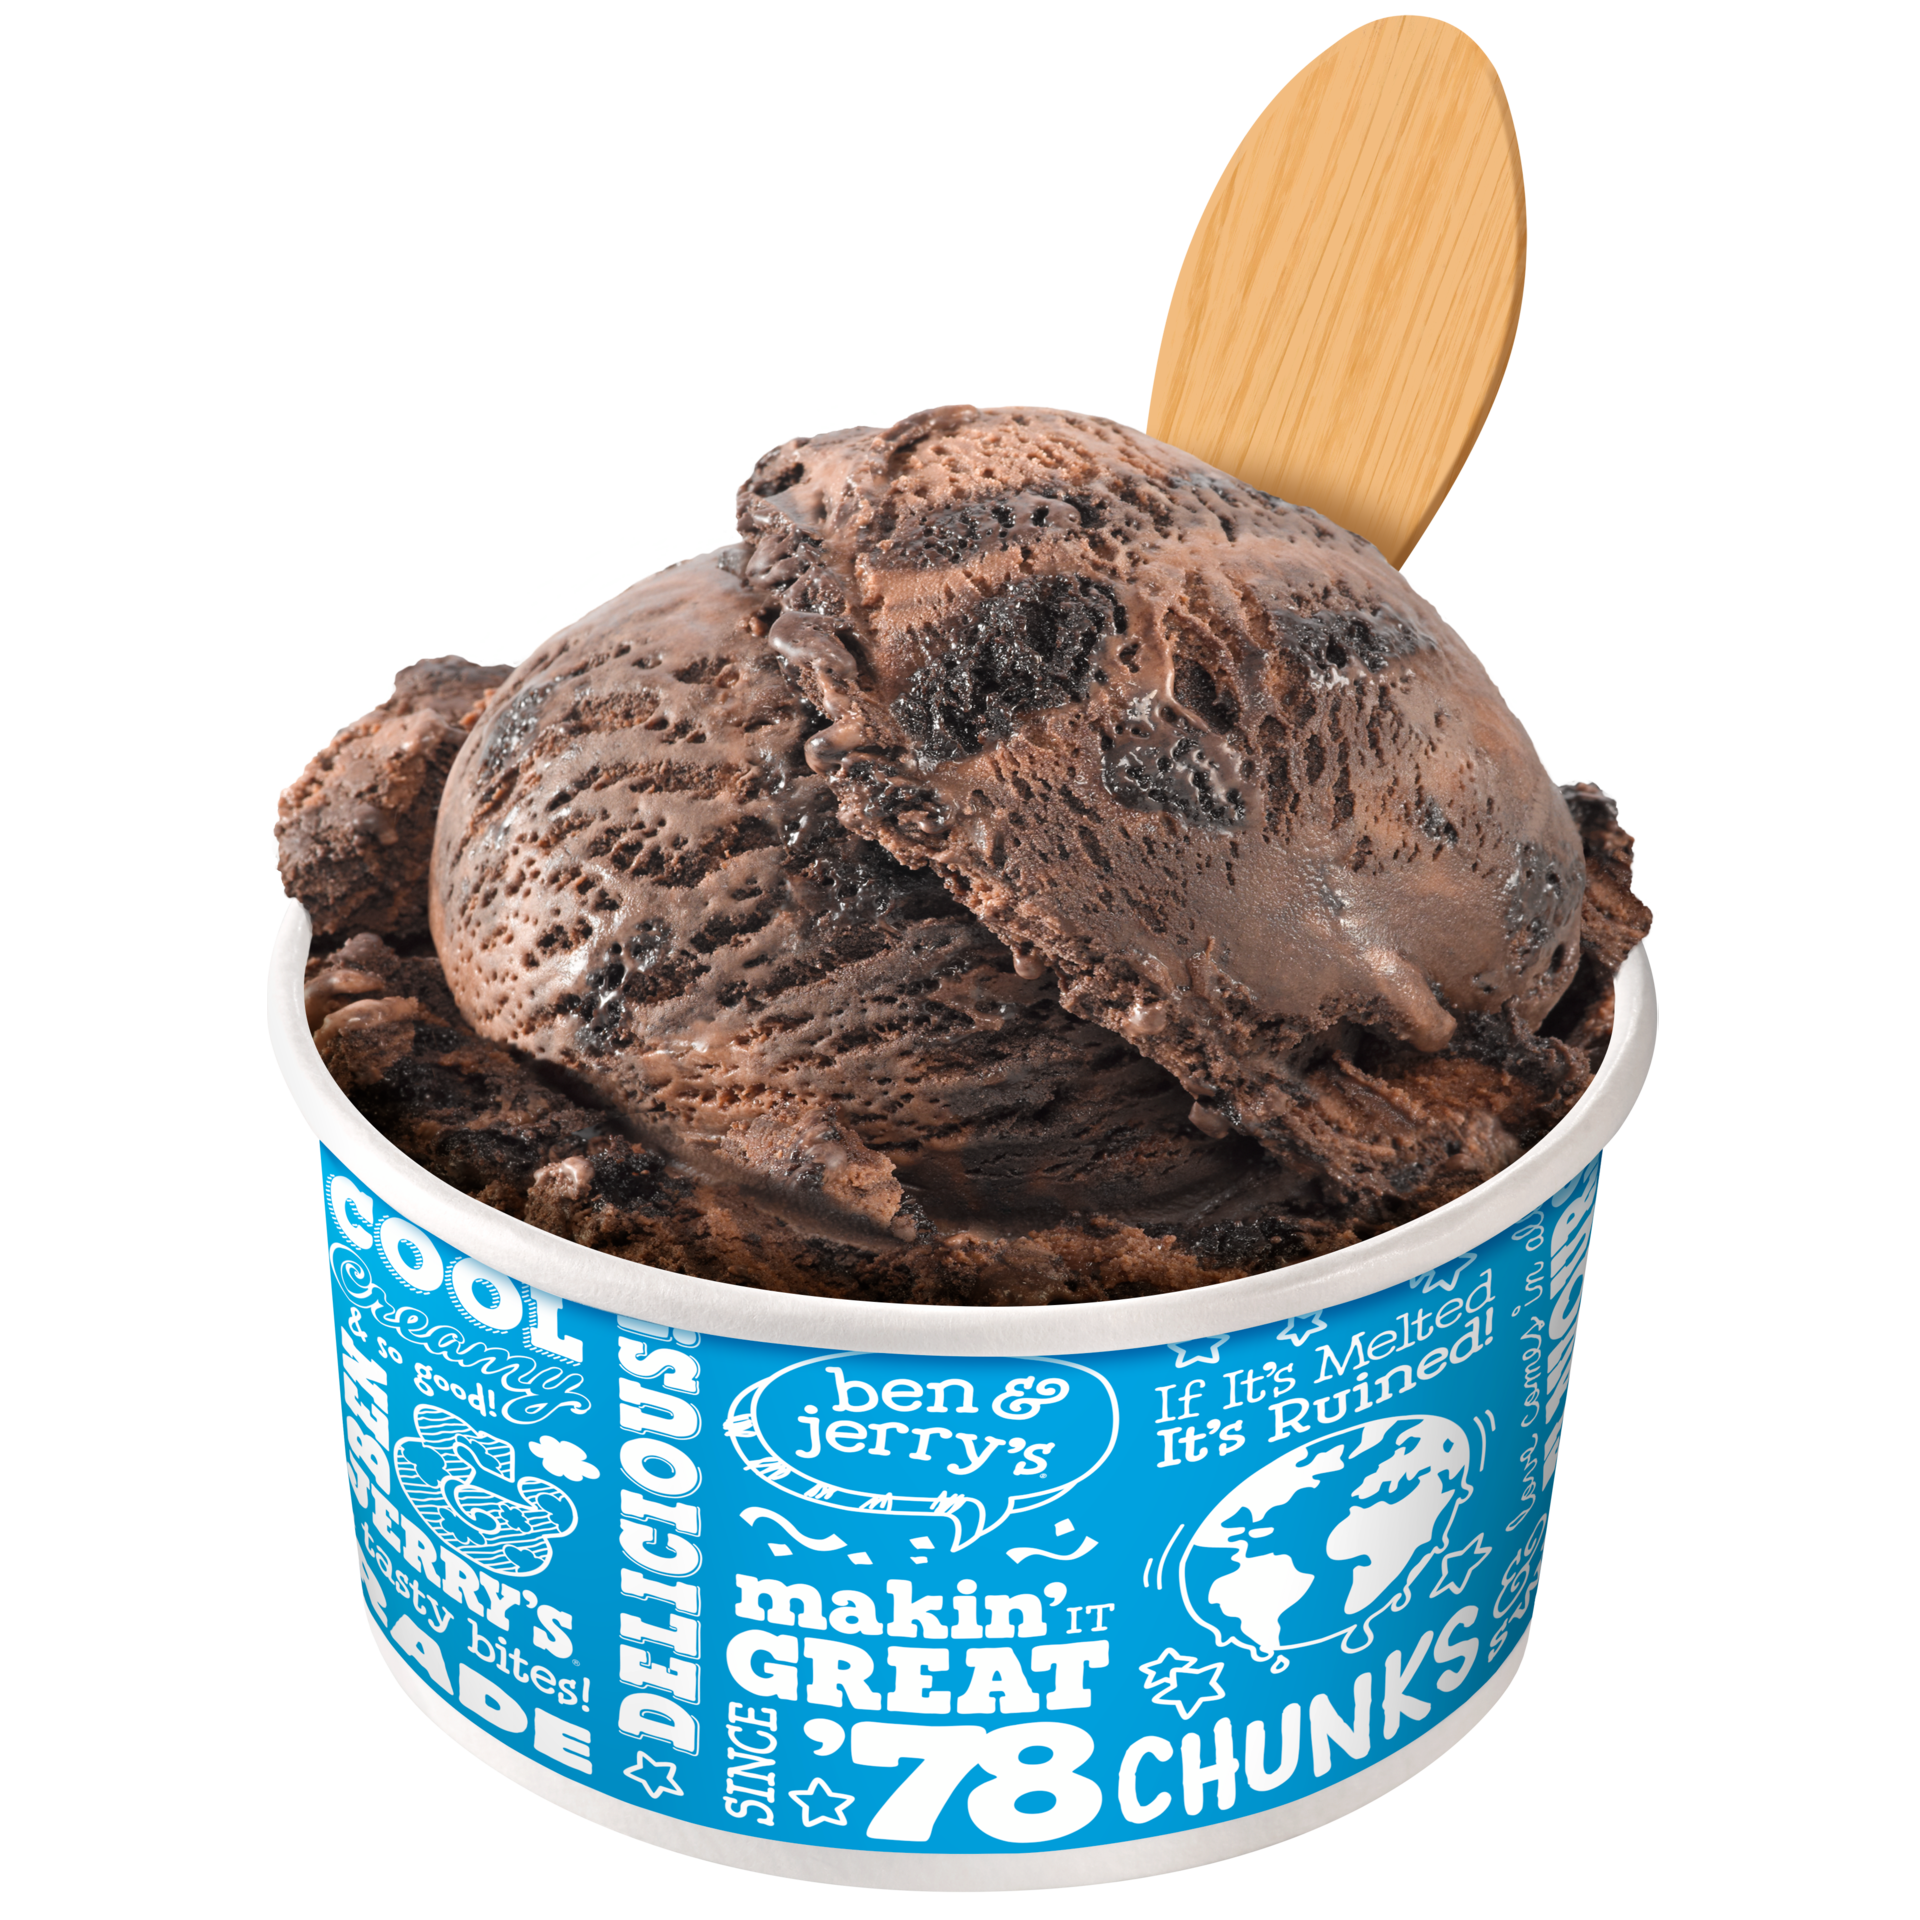 Chocolate Therapy® Original Ice Cream Scoop Shops